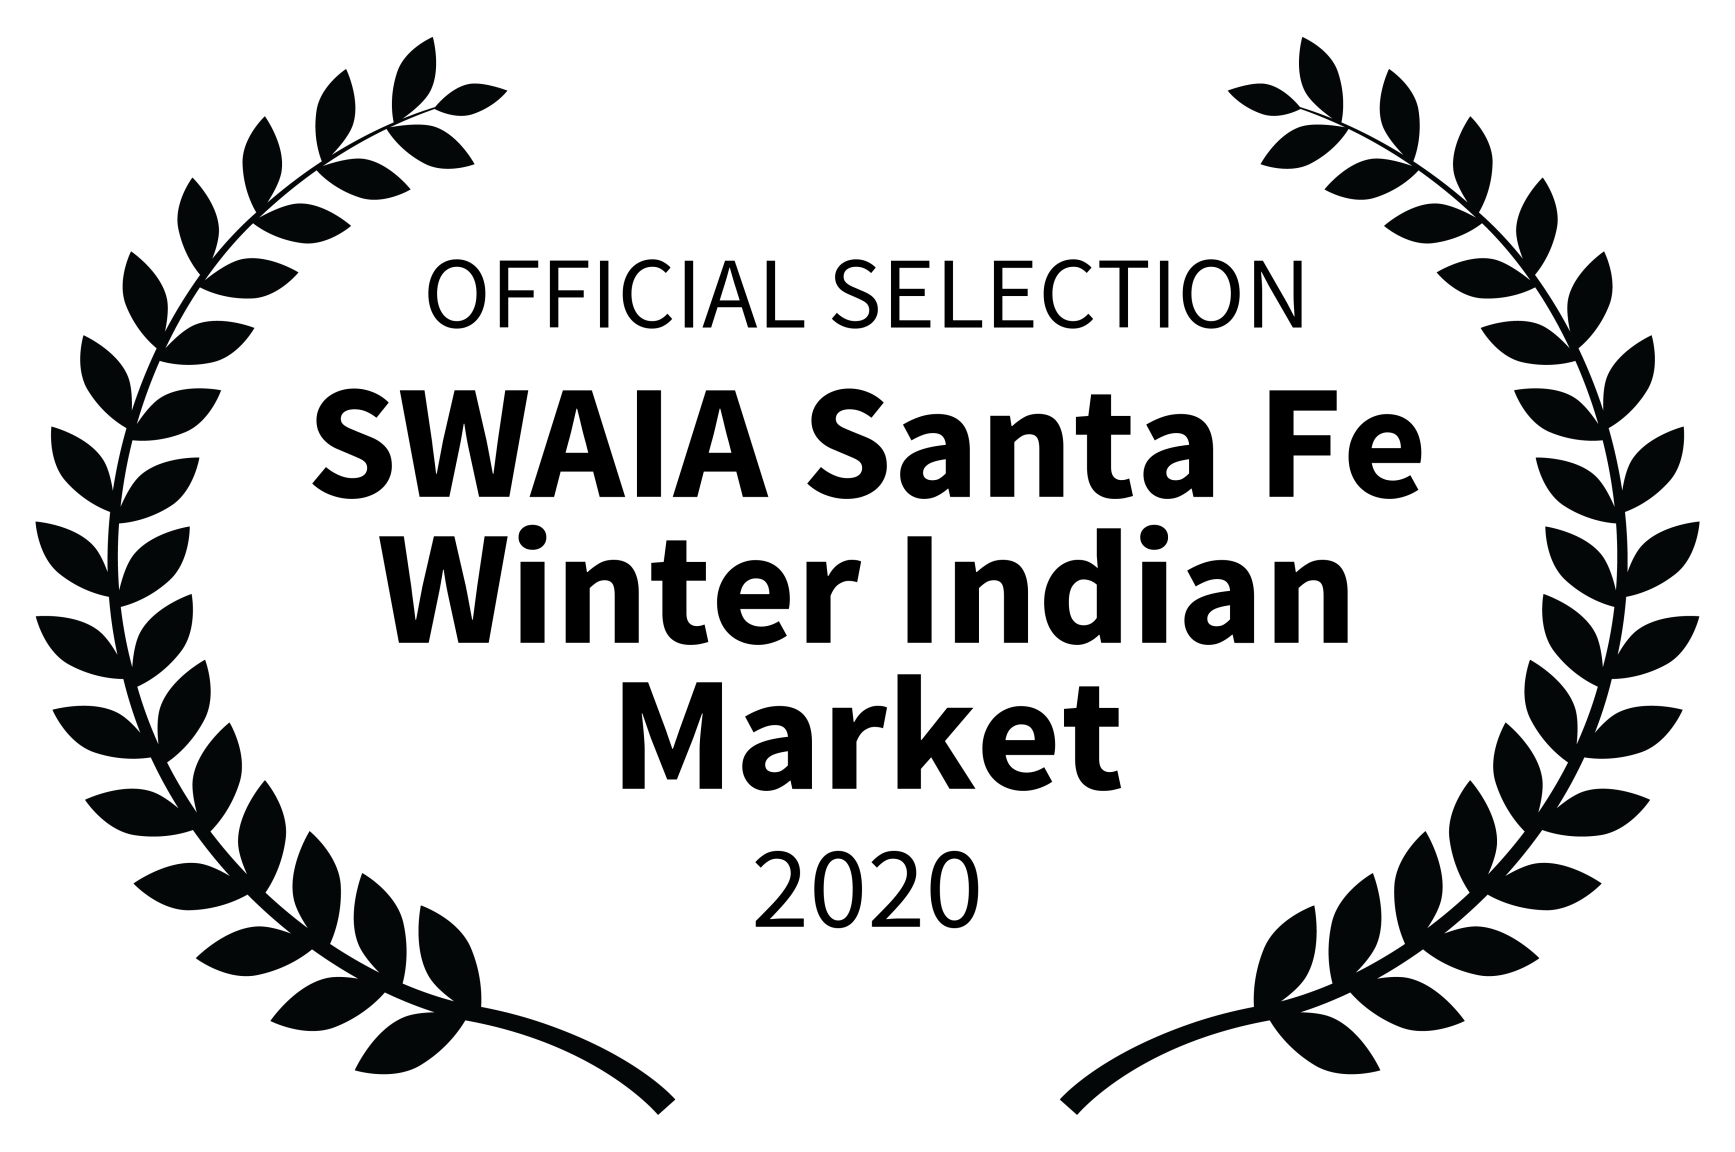 2020 Official Selection for SWAIA Santa Fe Winter Indian Market